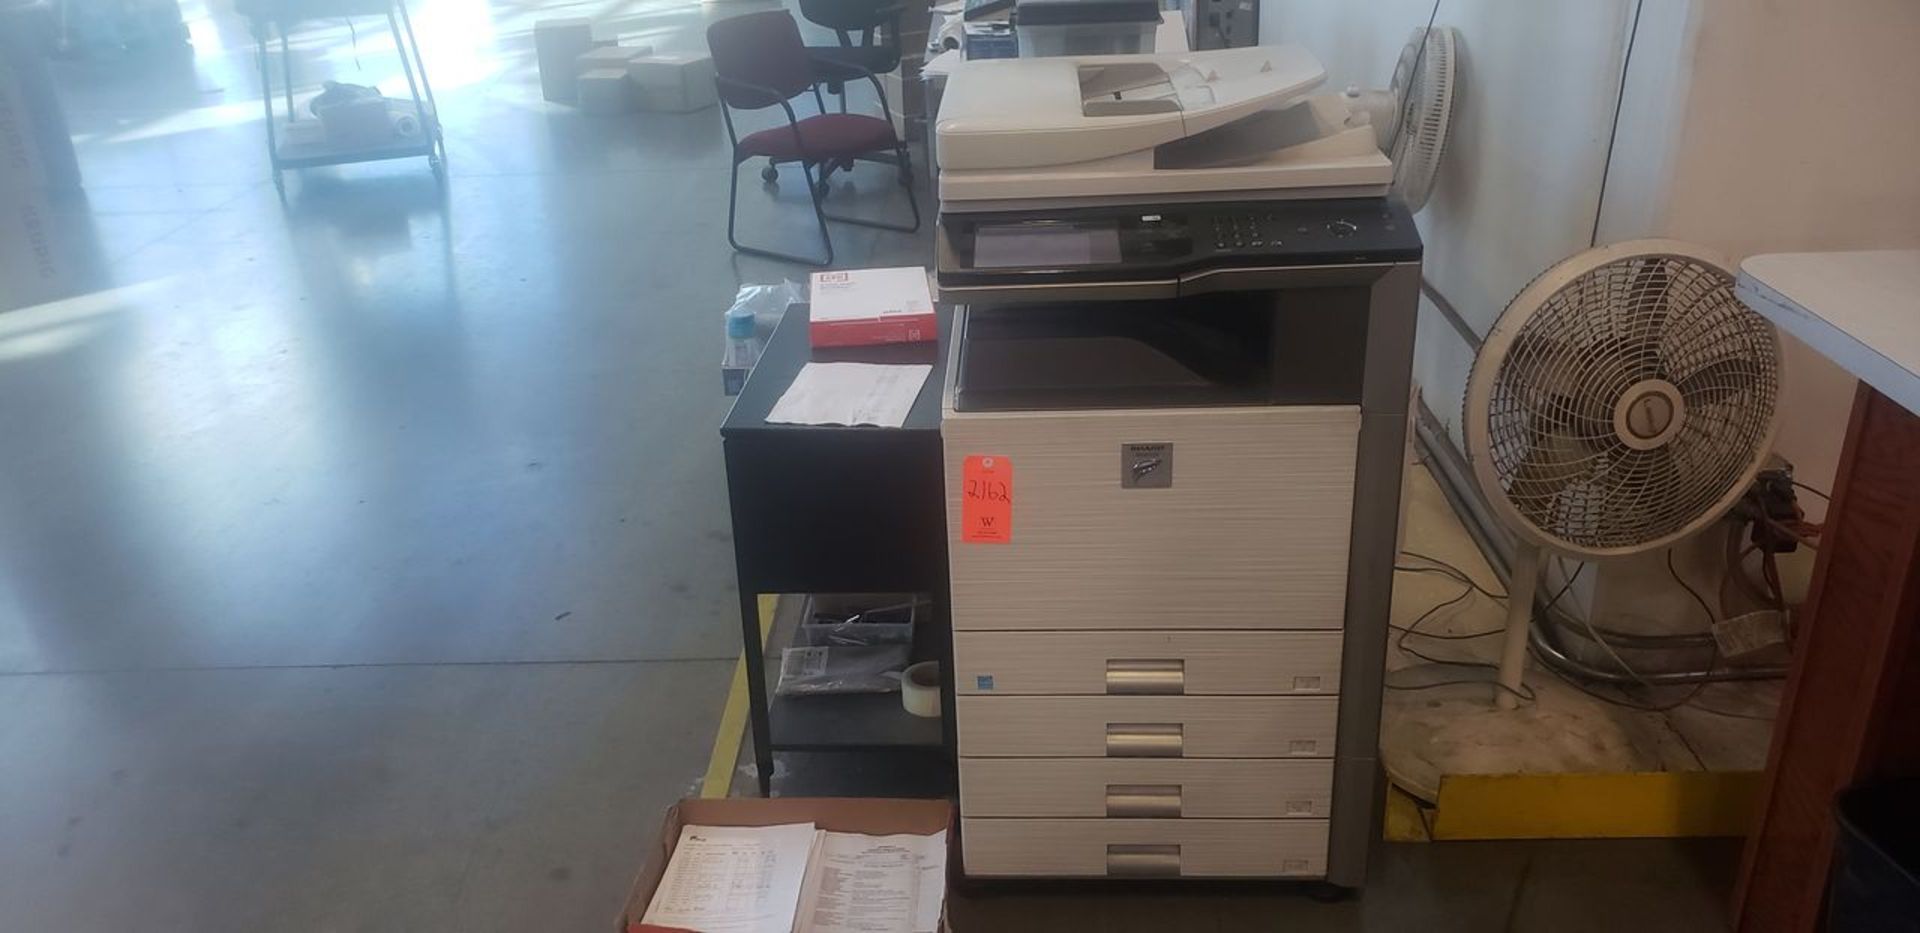 Sharp MX-M453N Printer/Scanner/Copier - (Located In: Redlands, CA)